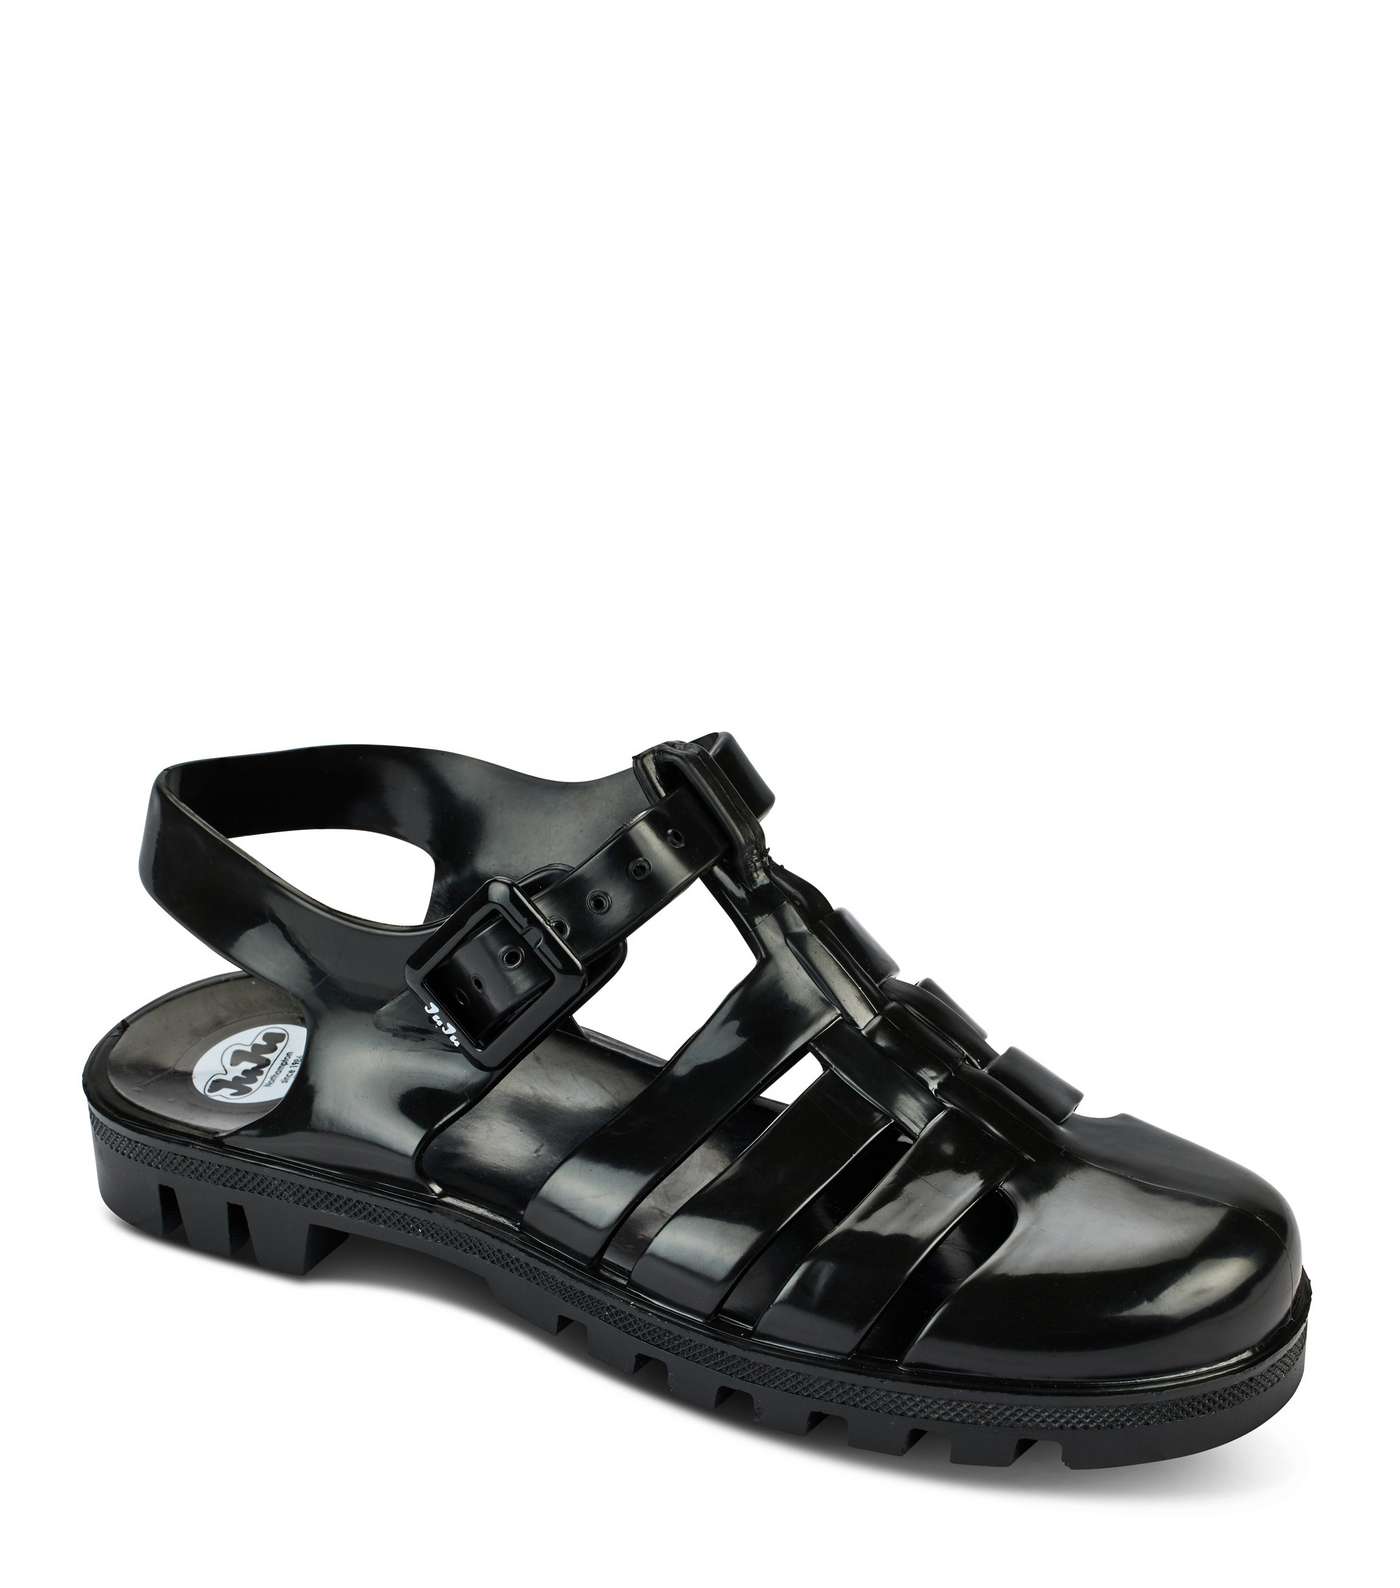 JUJU Black Jelly Sandals Image 2